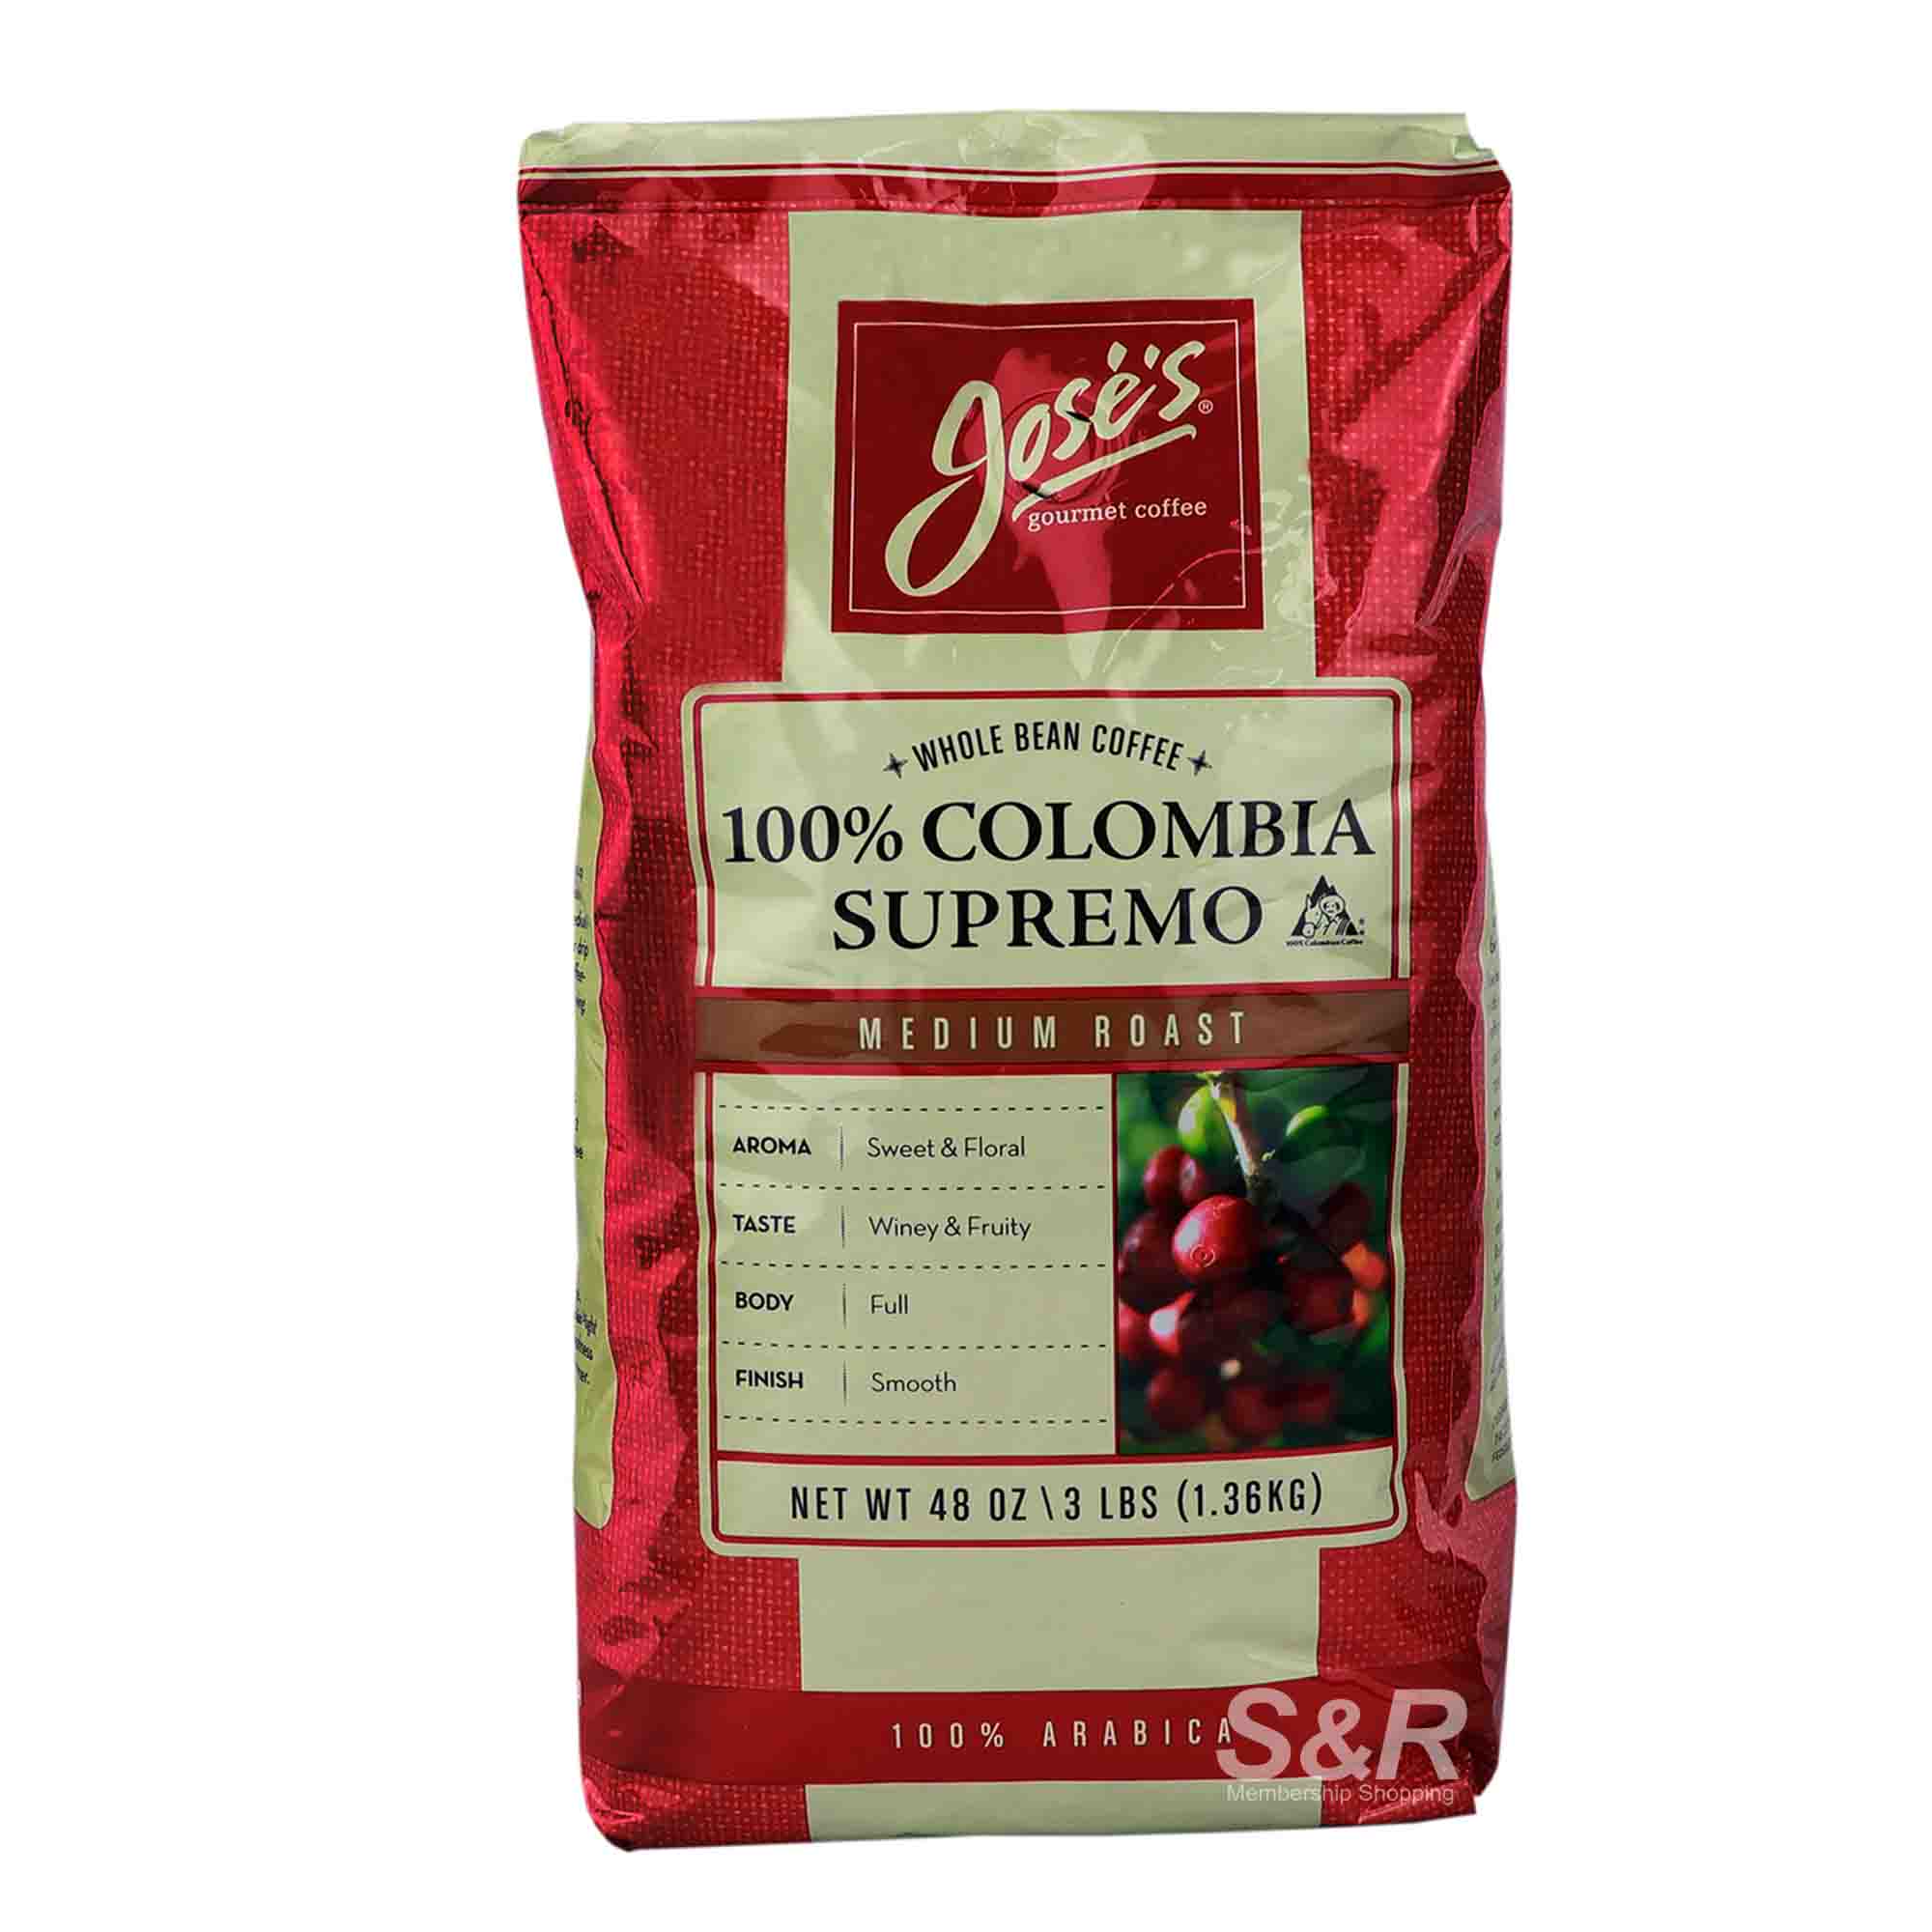 Jose's Gourmet Coffee Whole Bean 100% Colombia Supremo Medium Roast 1.36kg